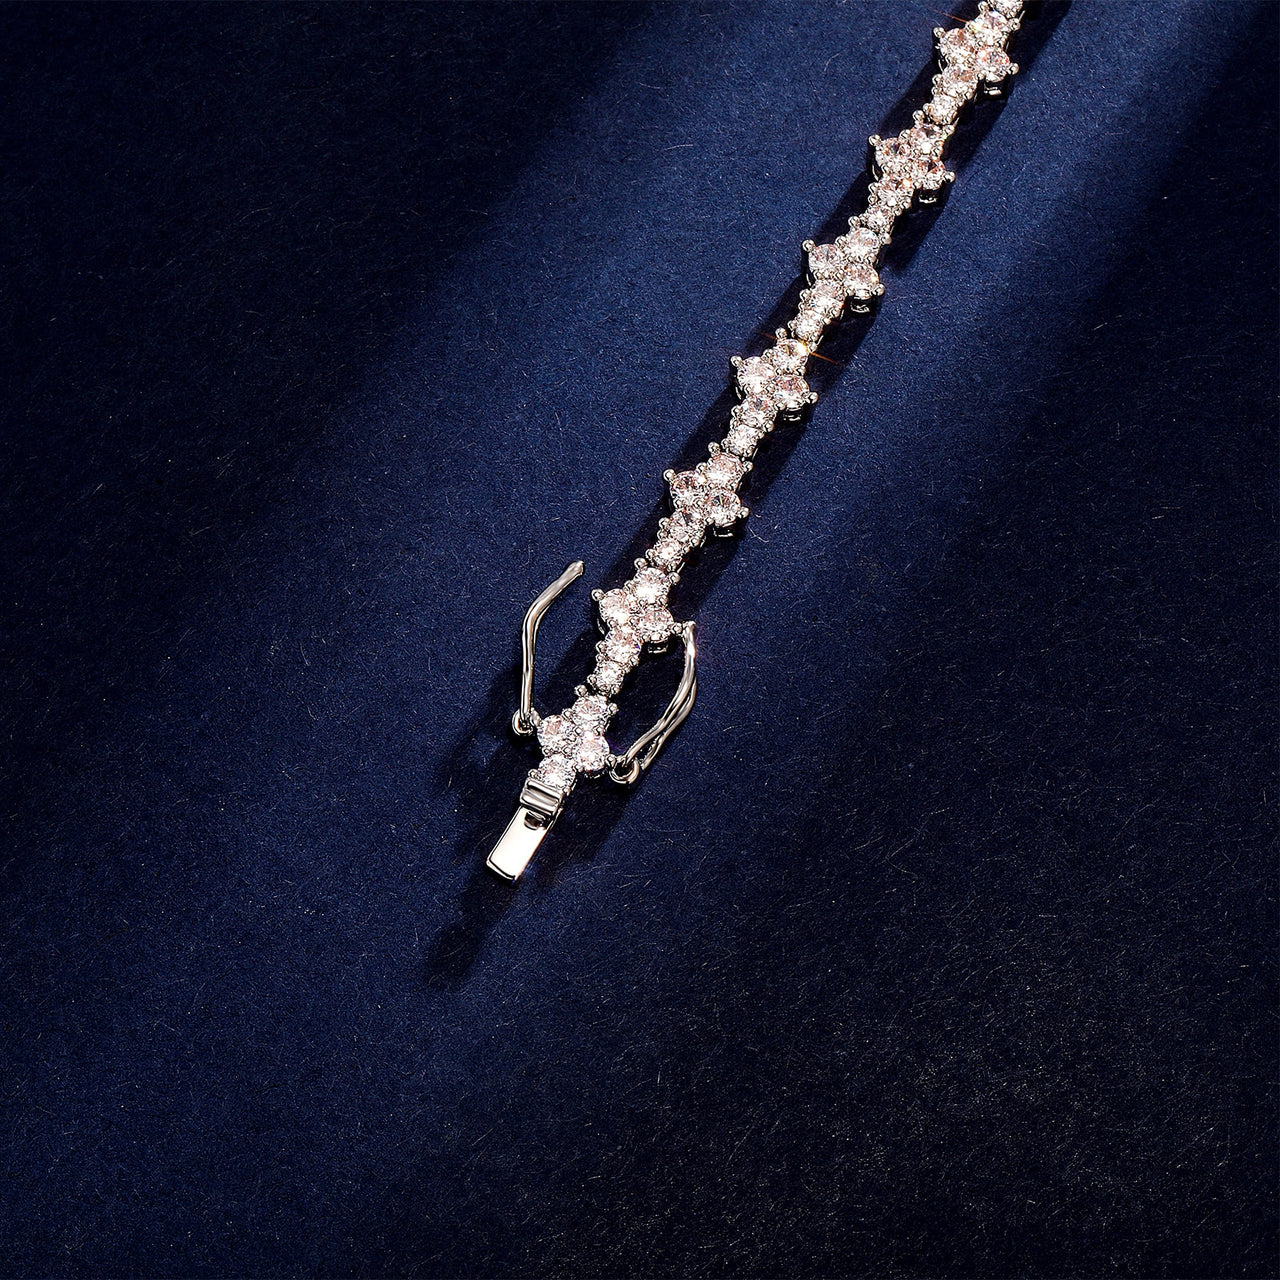 7mm Diamond Star Link Chain - Different Drips